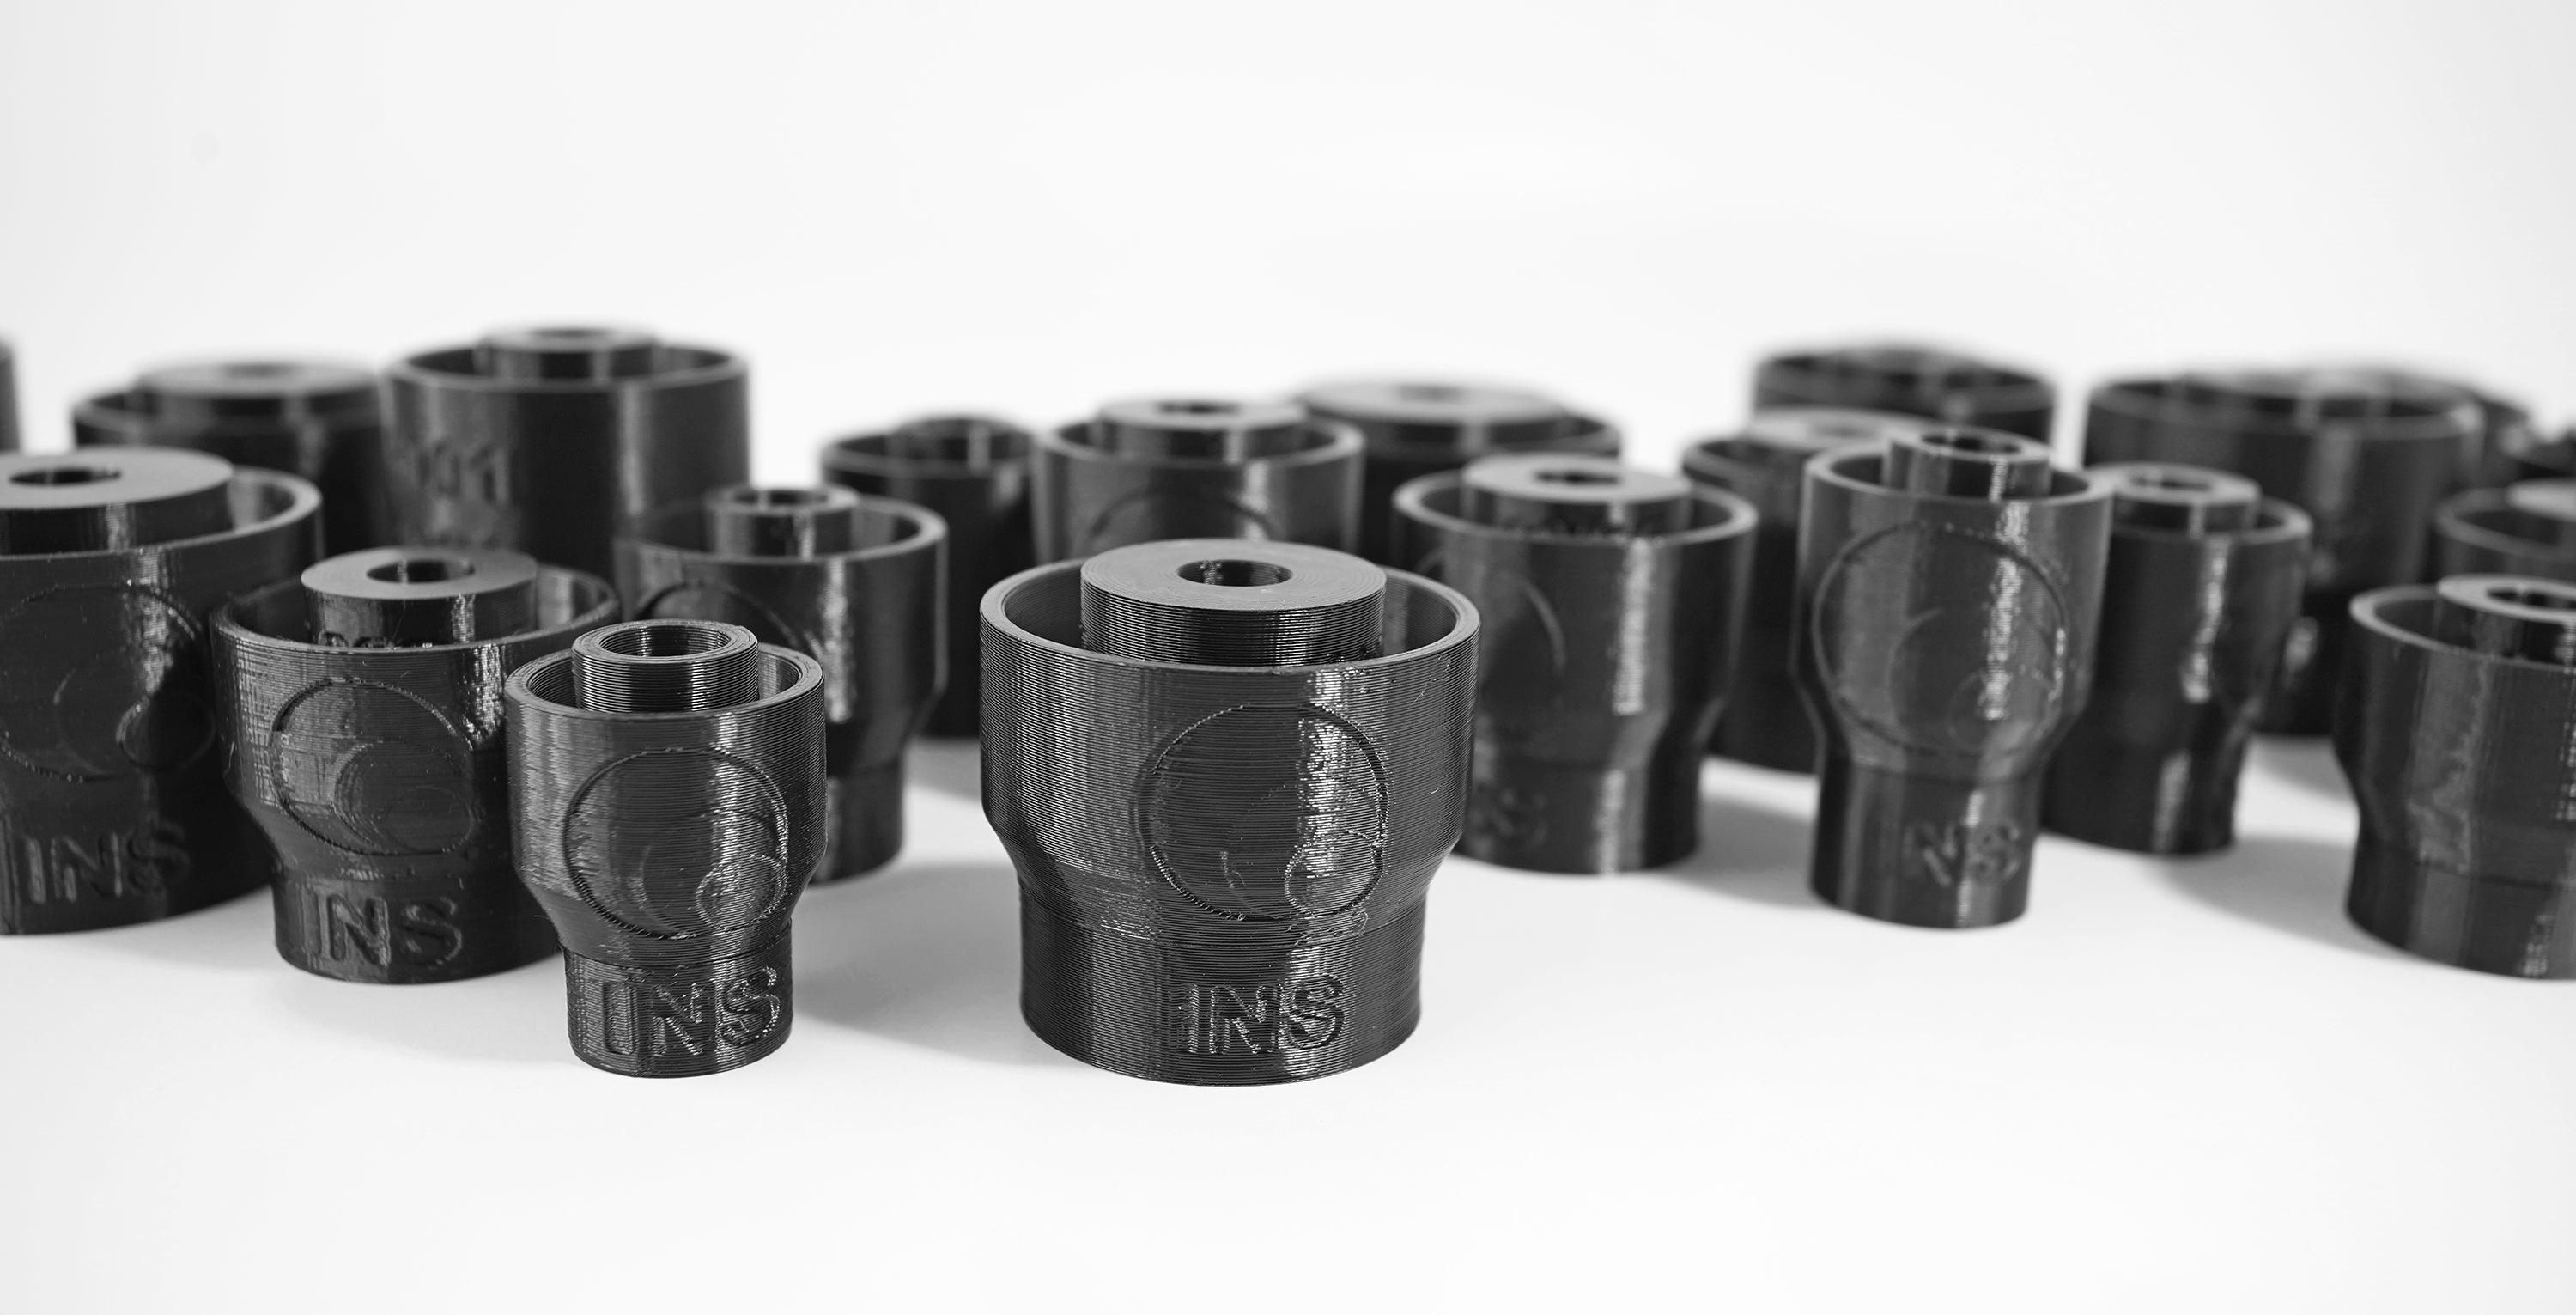 Momentum Cycle Tools Bearing Press Kits. Quality 3D printed MTB tools made in Canada.